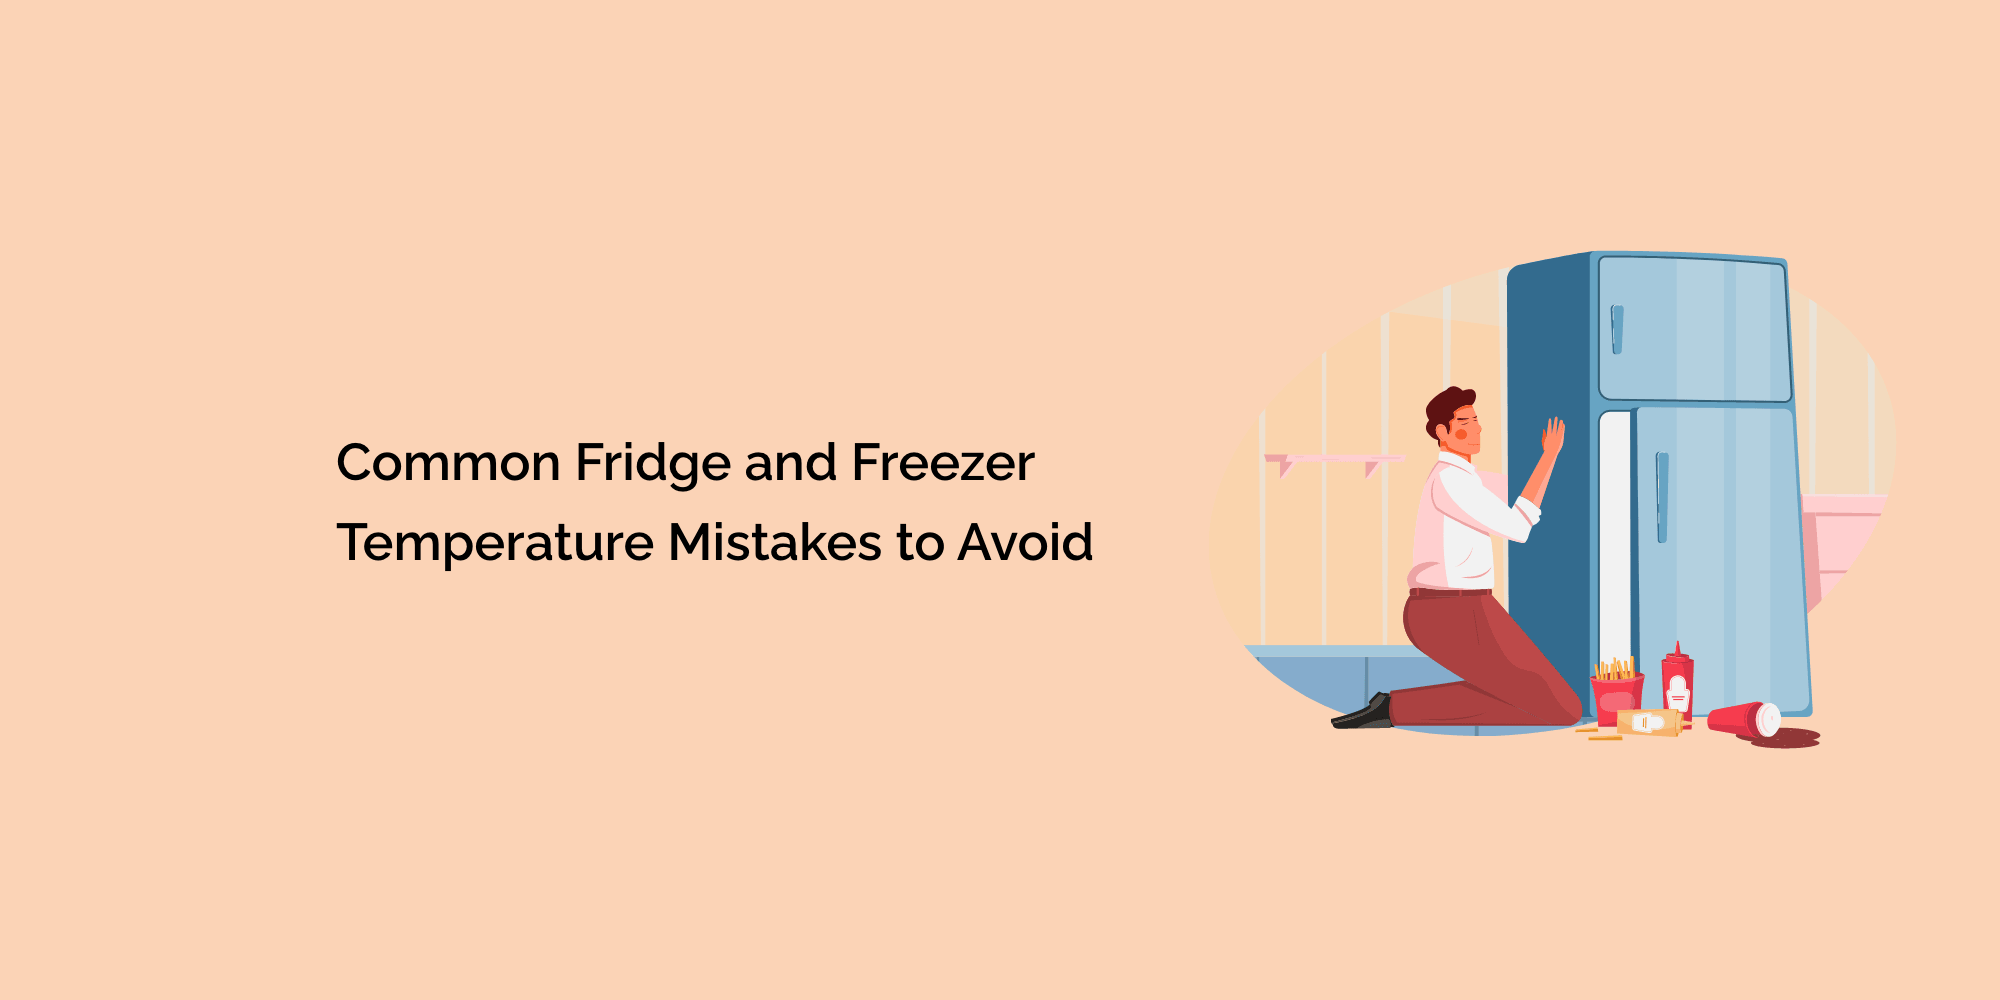 Common Fridge and Freezer Temperature Mistakes to Avoid